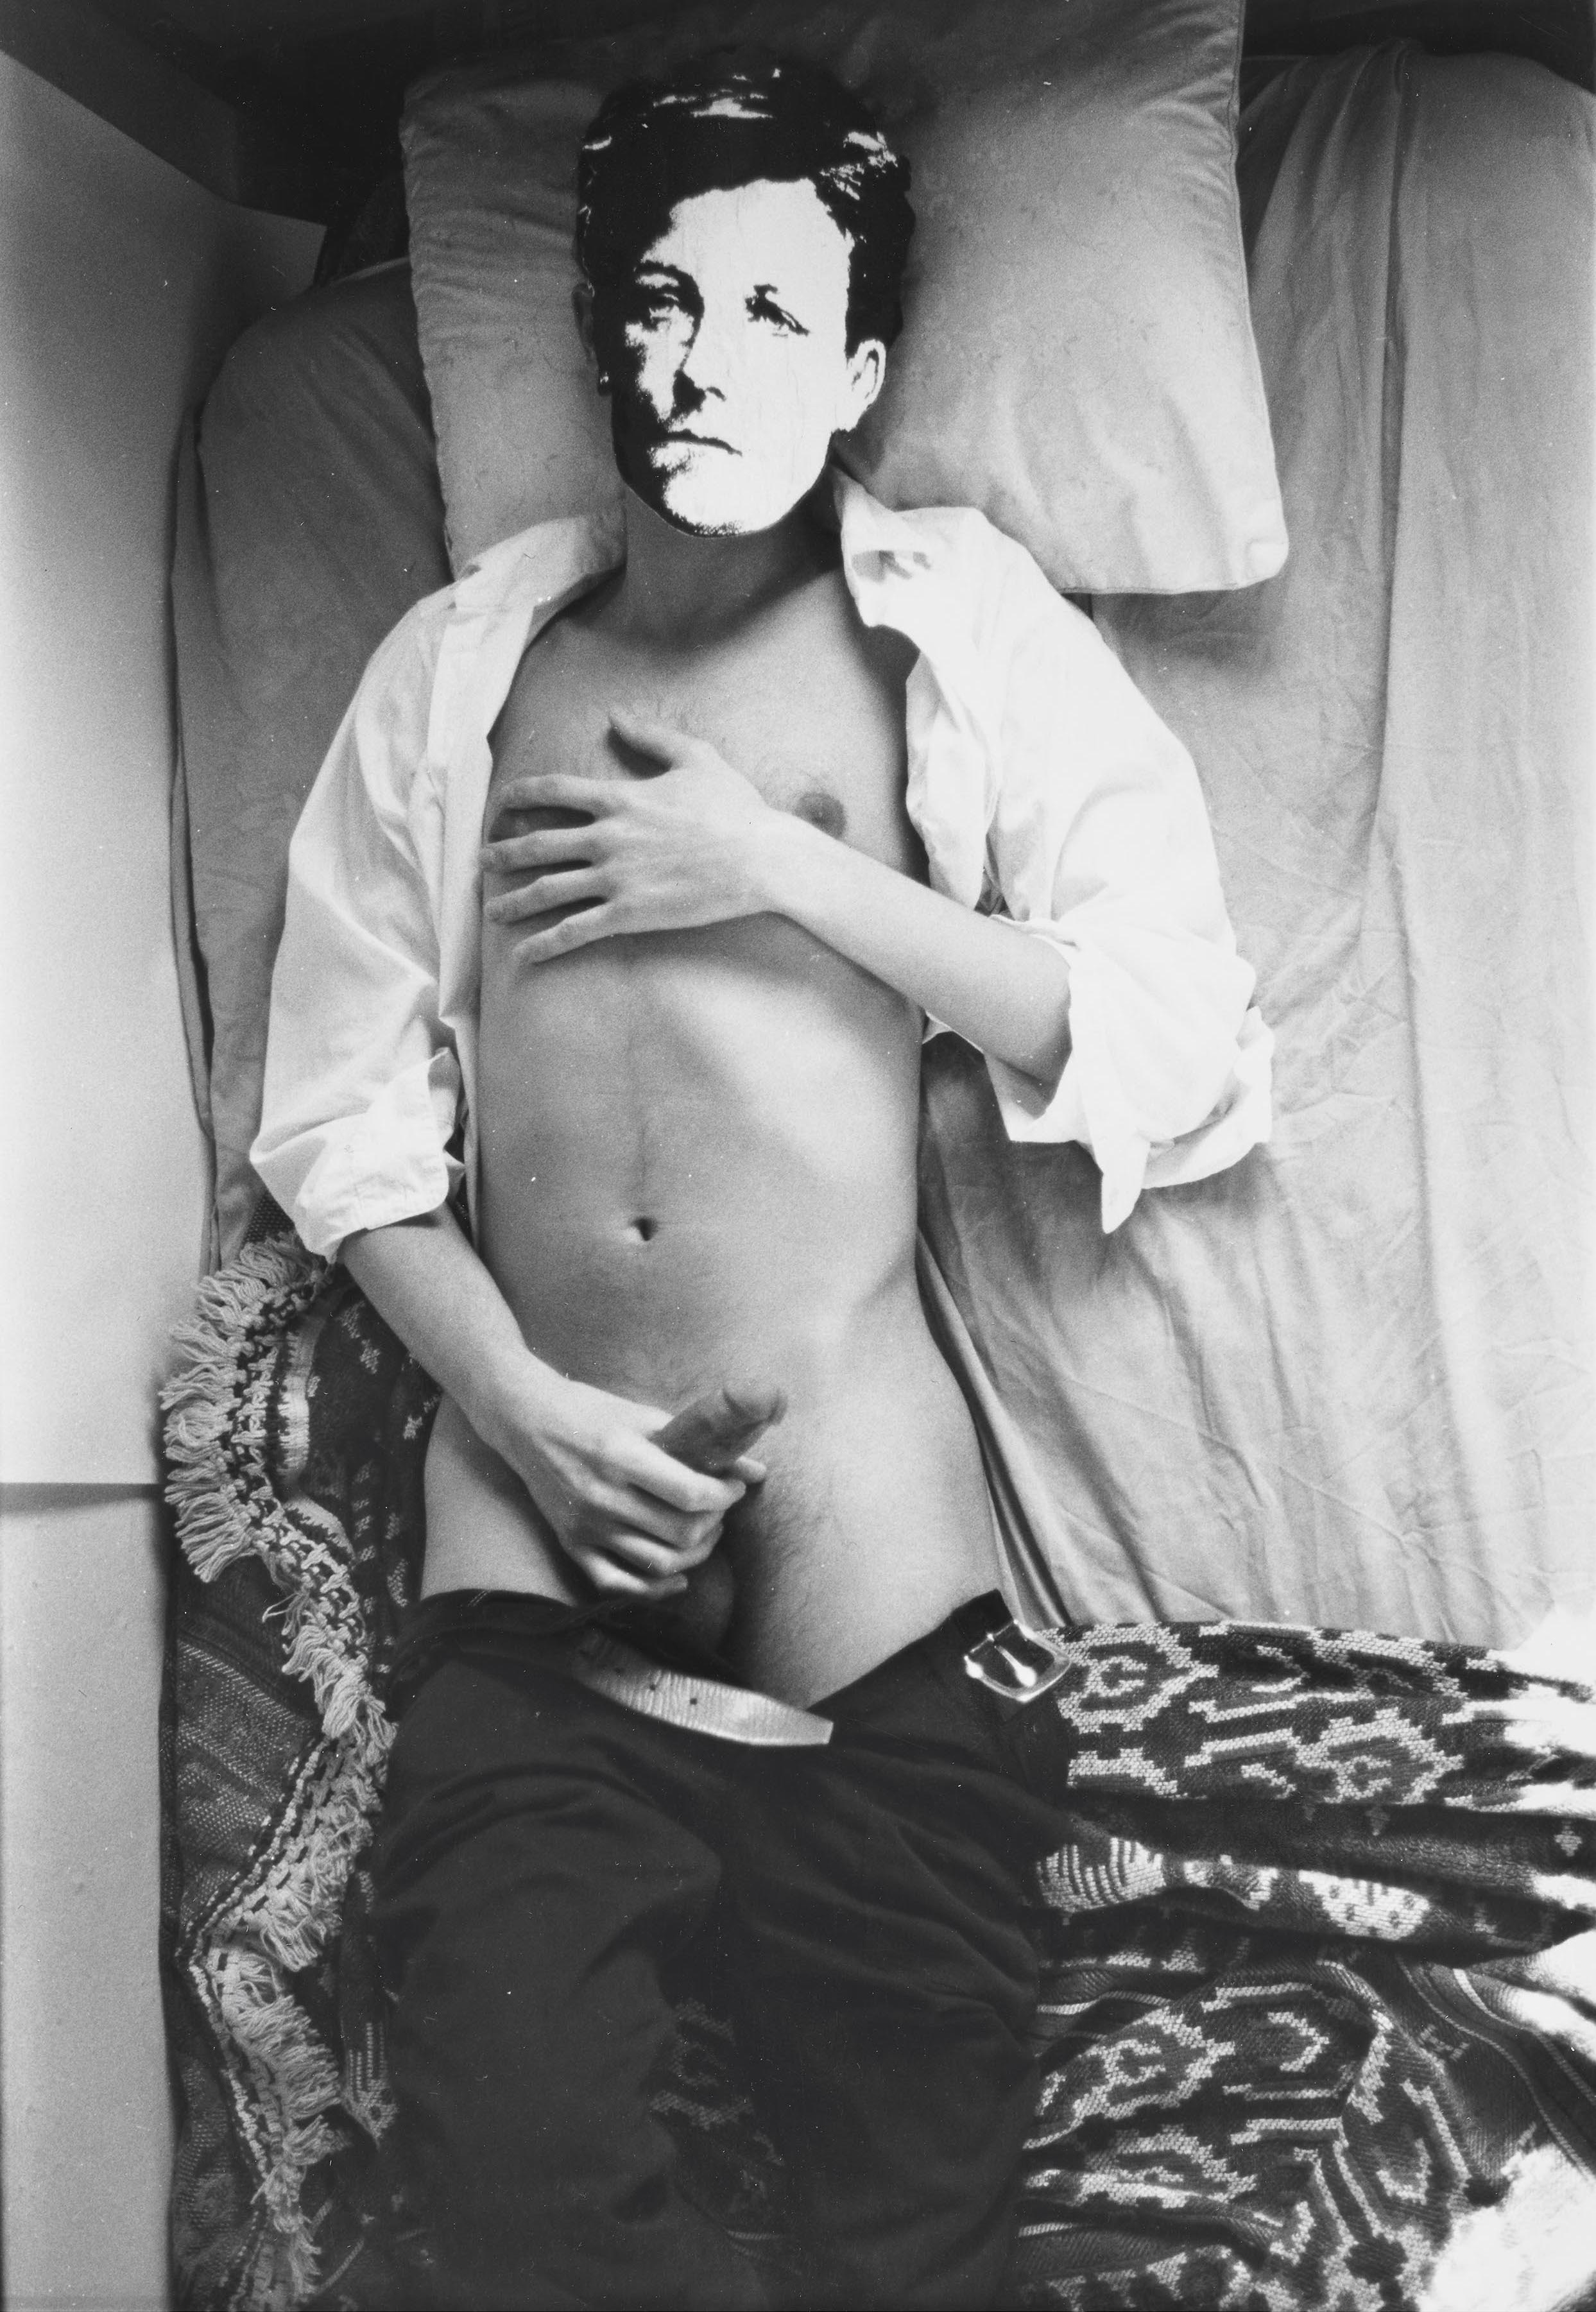 David Wojnarowicz, Arthur Rimbaud in New York, 1978-1979. Courtesy of PPOW Gallery, NY and the Estate of David Wojnarowicz